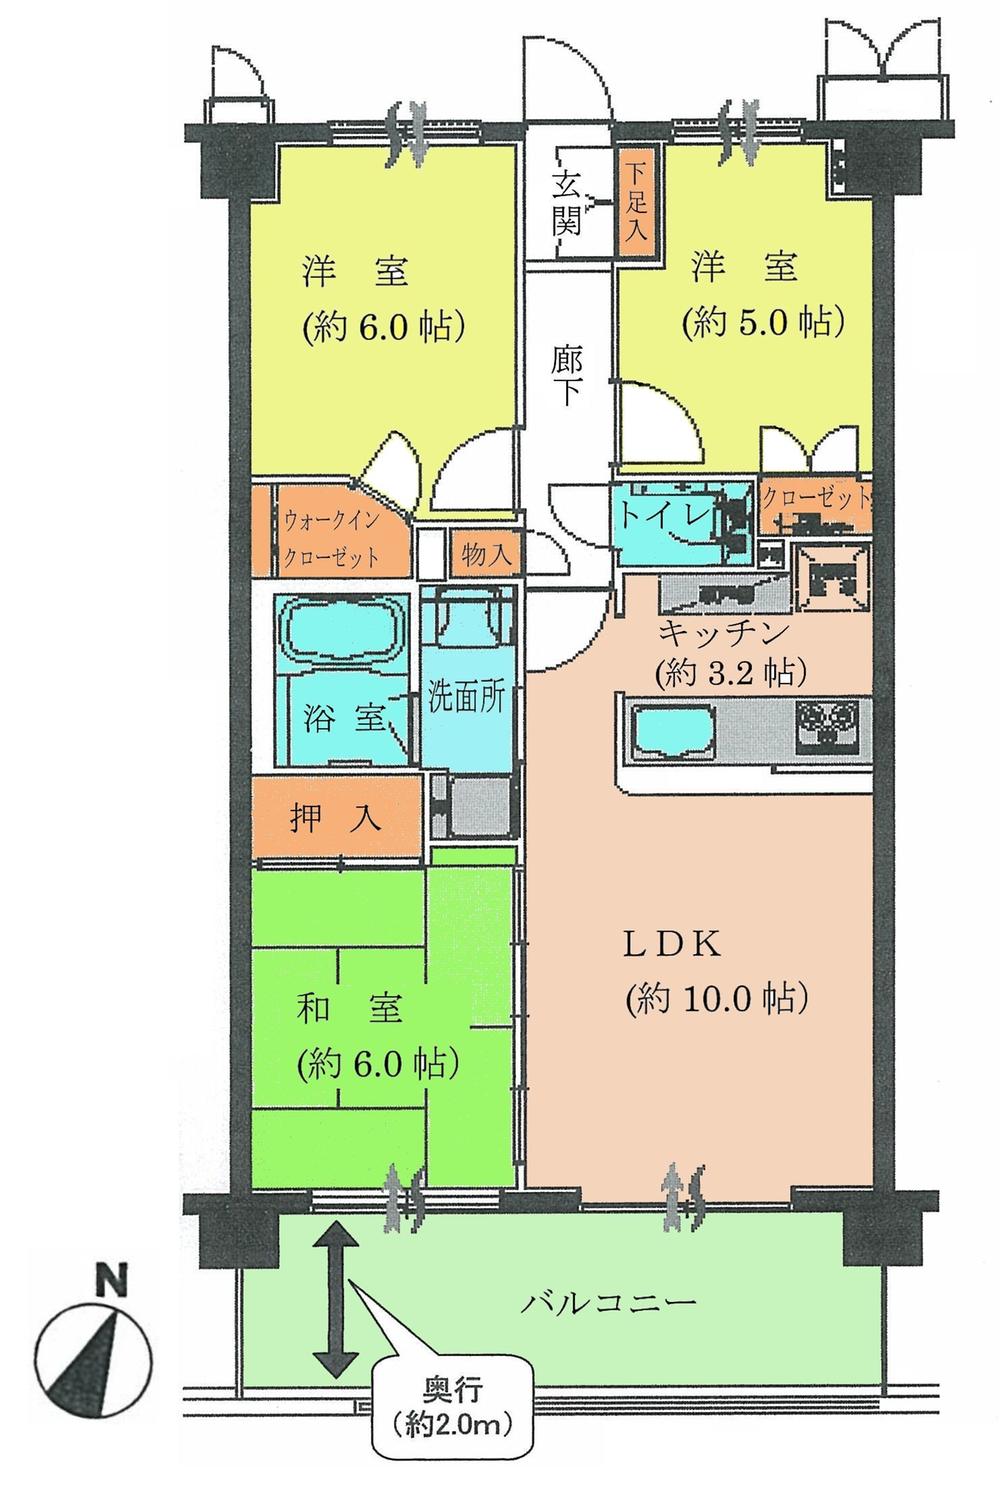 Floor plan. 3LDK, Price 13.8 million yen, Footprint 65.1 sq m , Balcony area 12.4 sq m floor plan